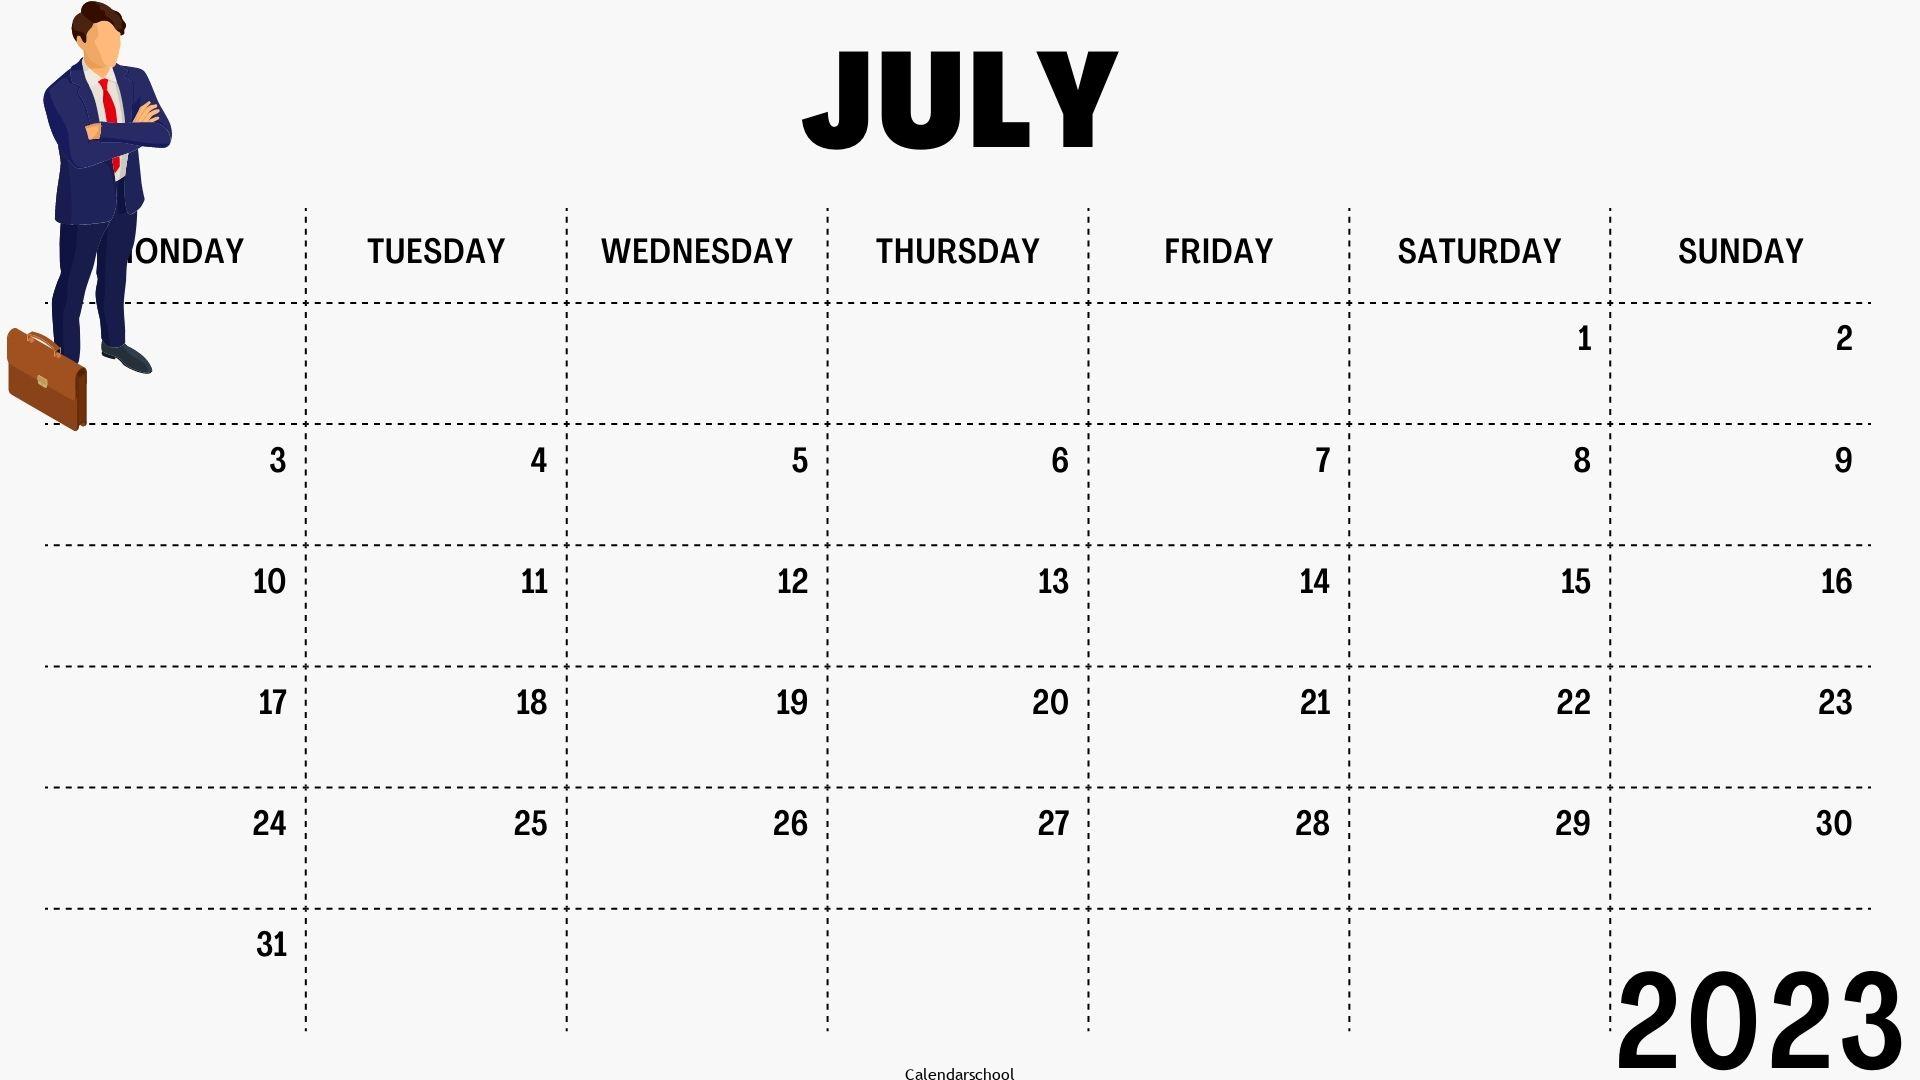 July Calendar 2023 With Festival